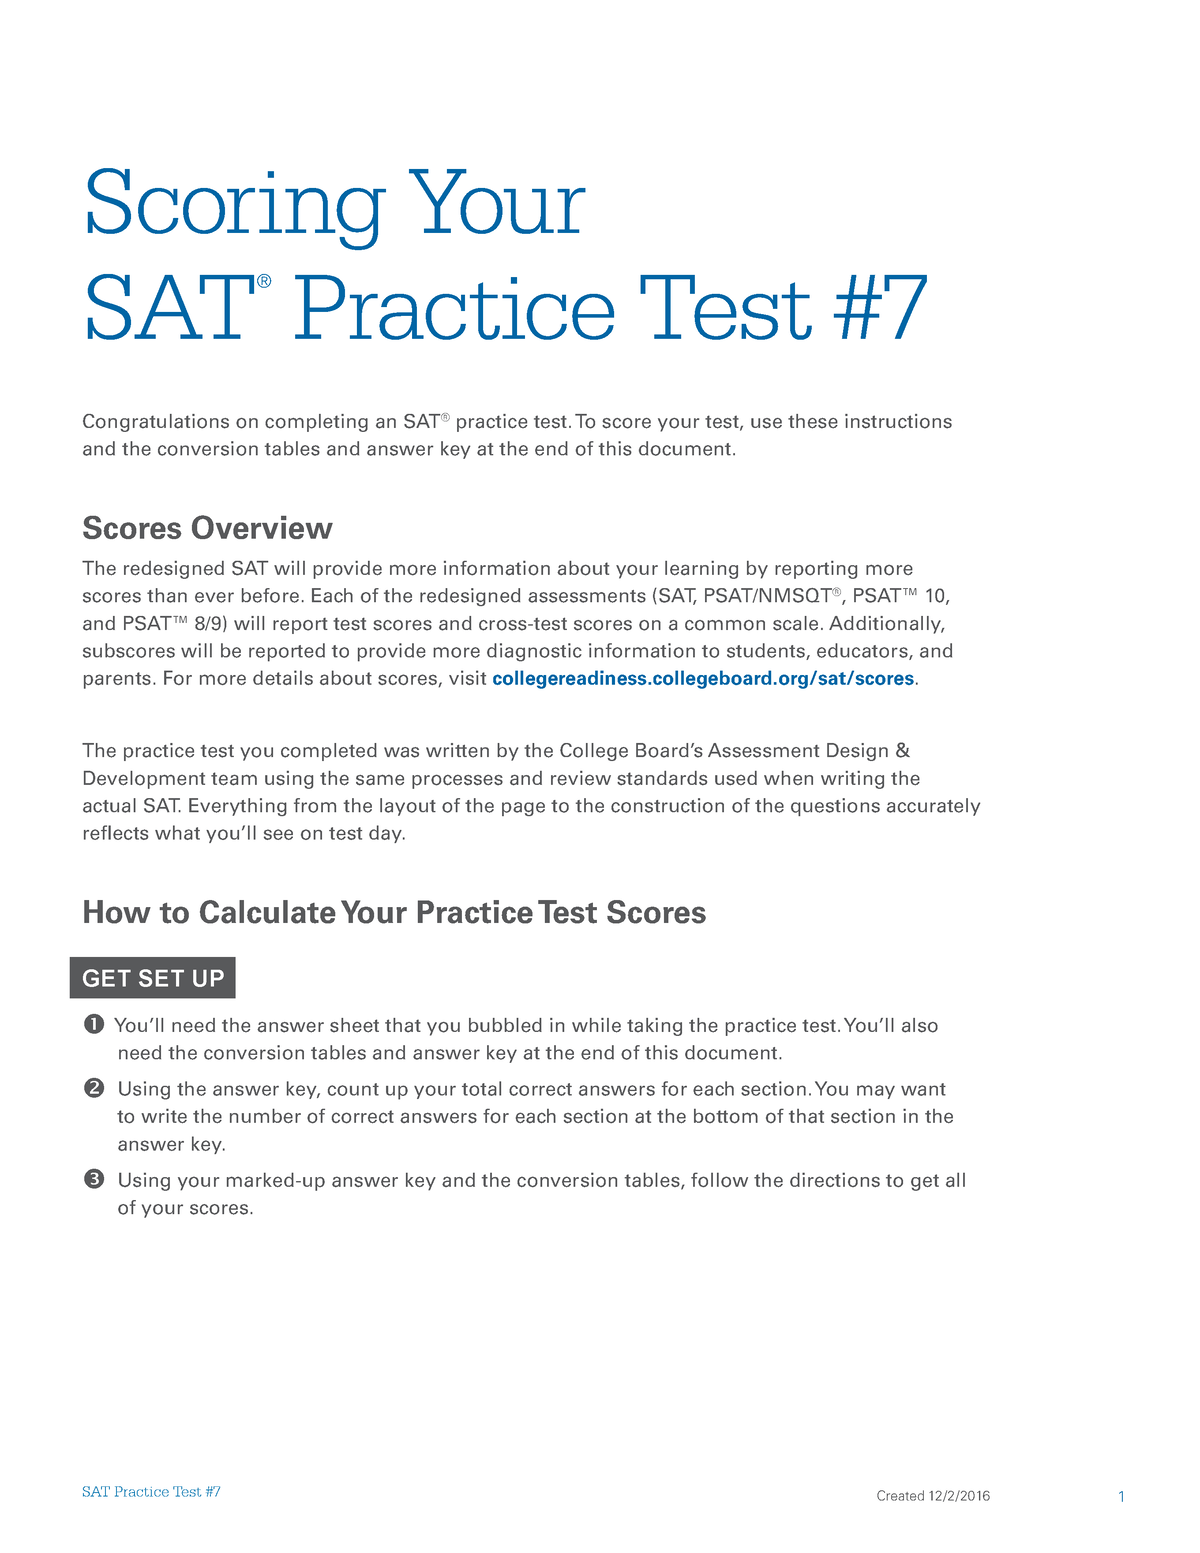 sat practice test 7 essay